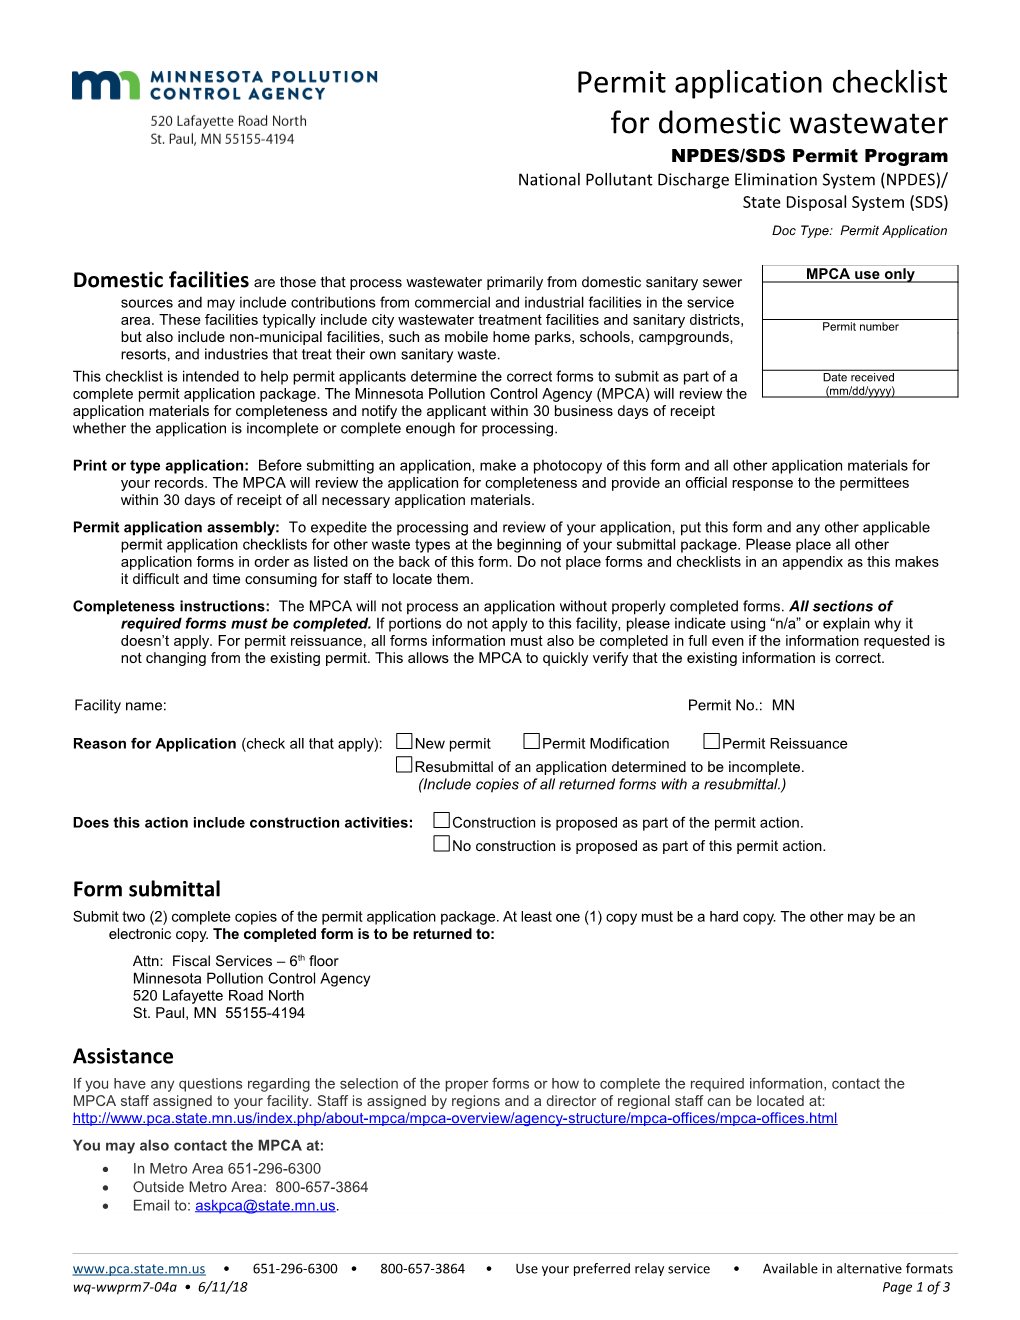 Permit Application Checklist for Domestic Wastewater